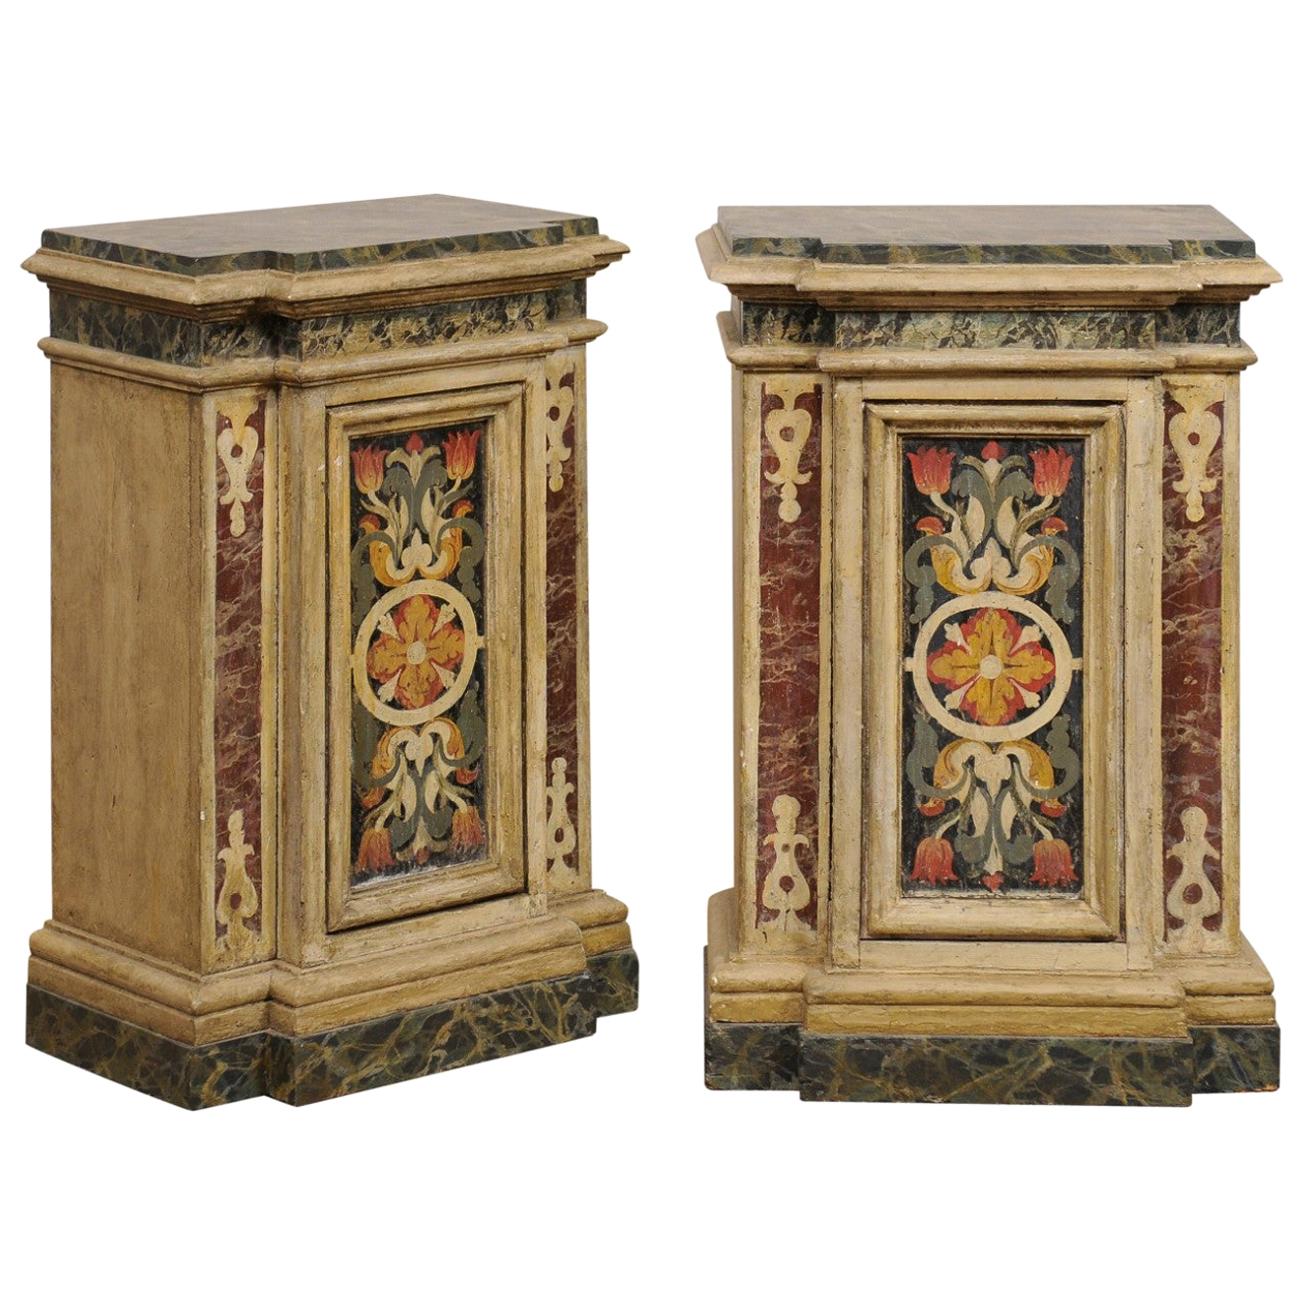 Antique Pair of Italian Wooden Pedestals with Original Artisan Paint